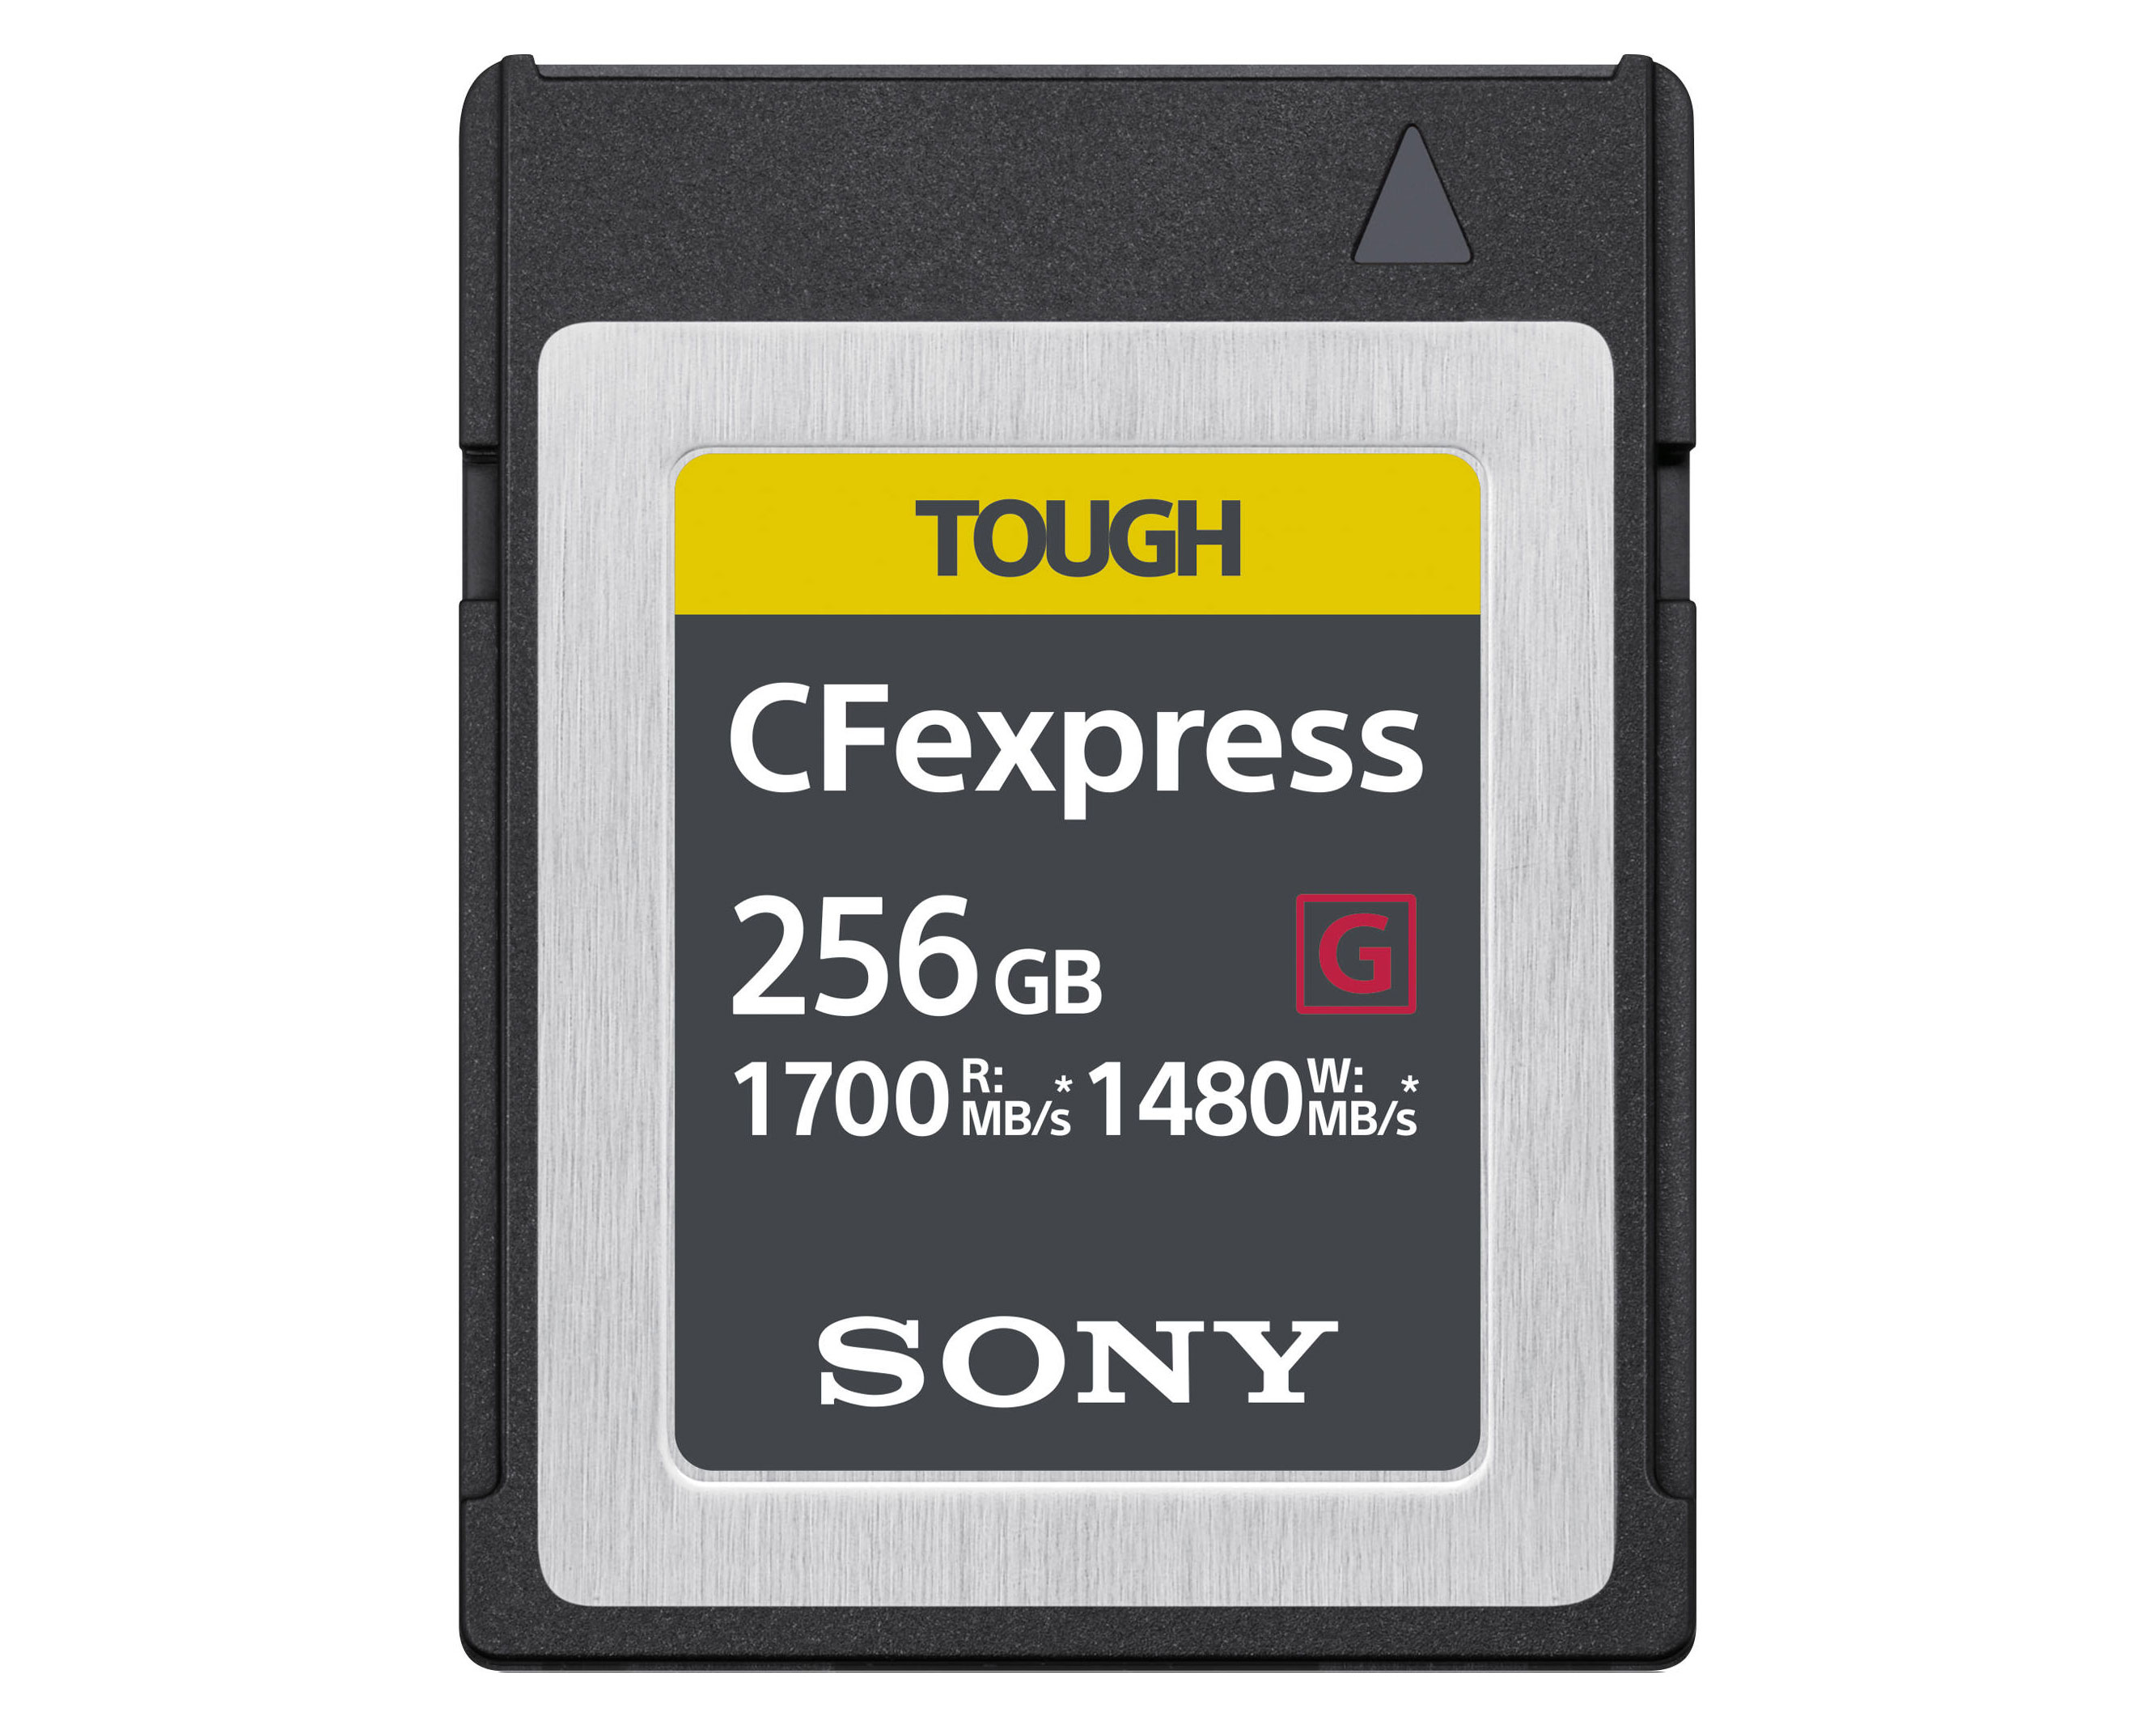 Sony CFexpress Tough G 256GB